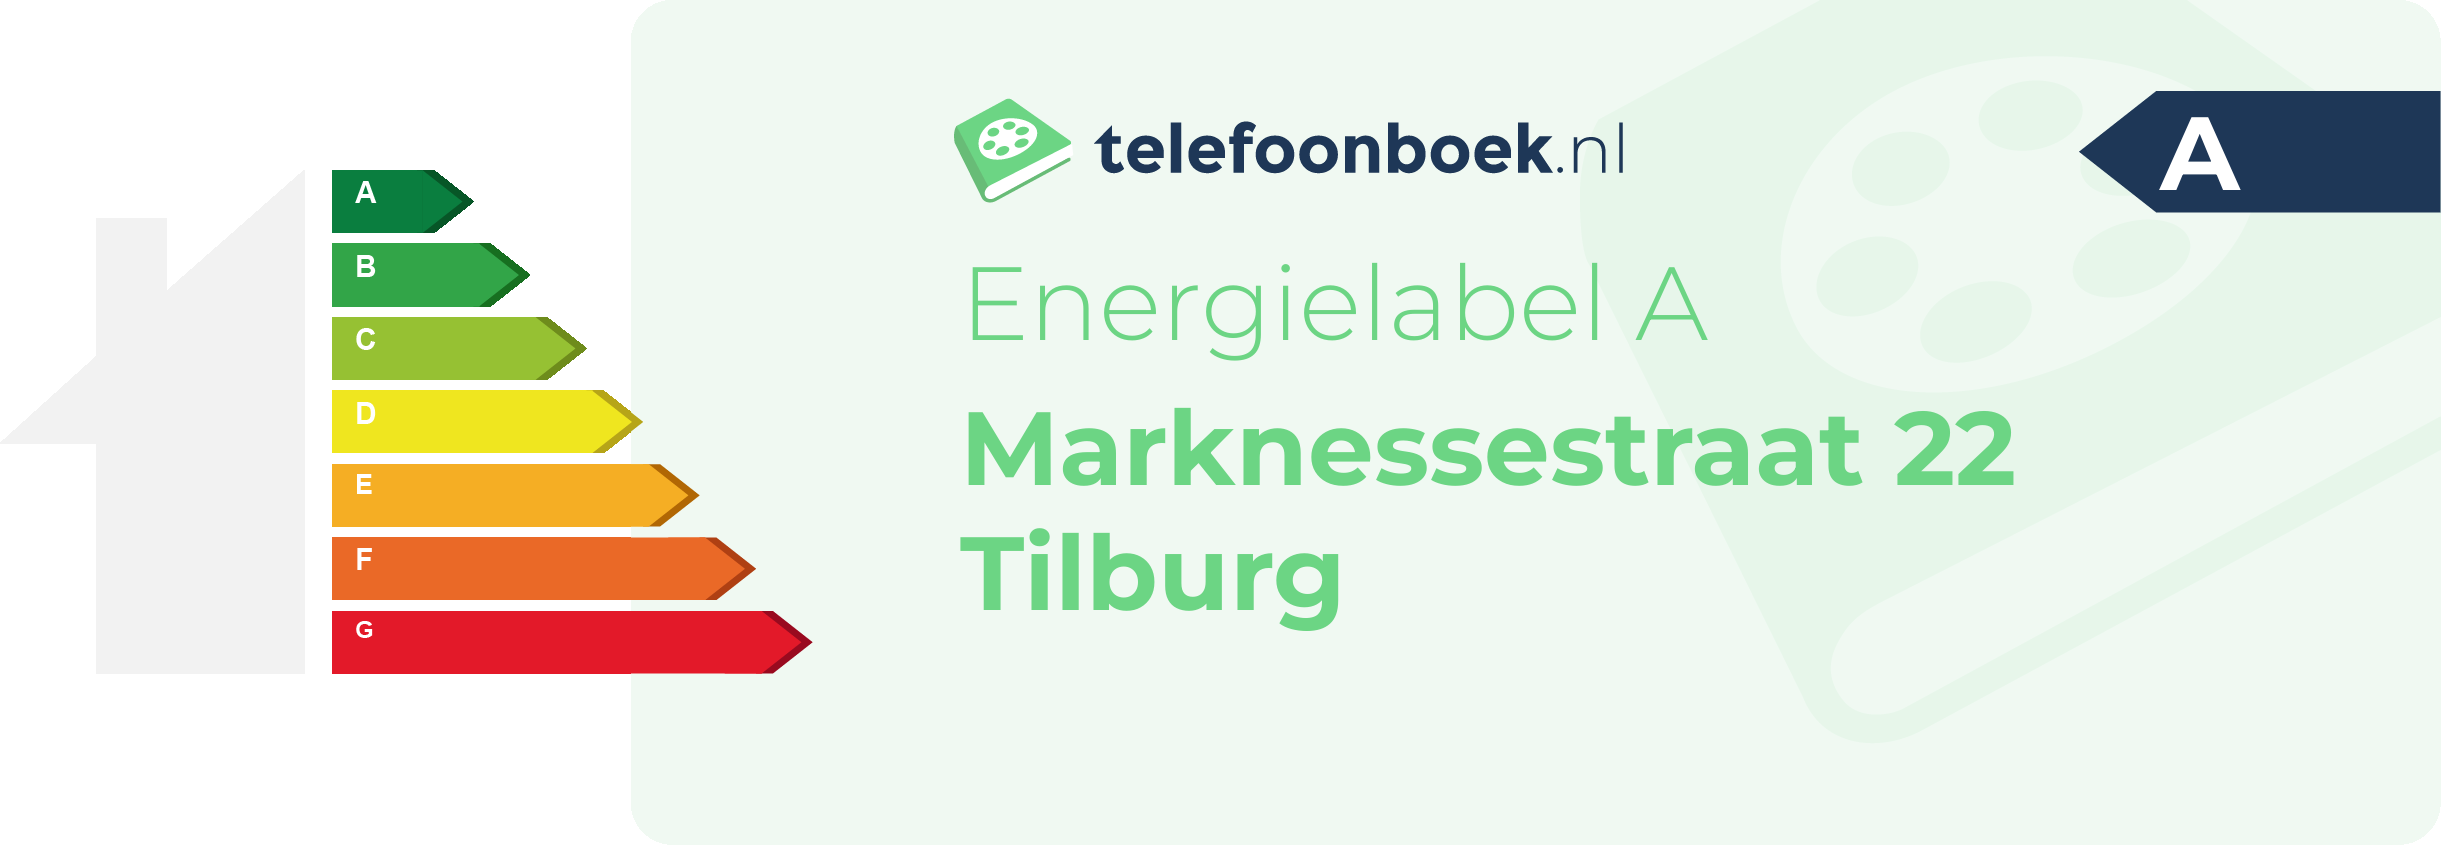 Energielabel Marknessestraat 22 Tilburg